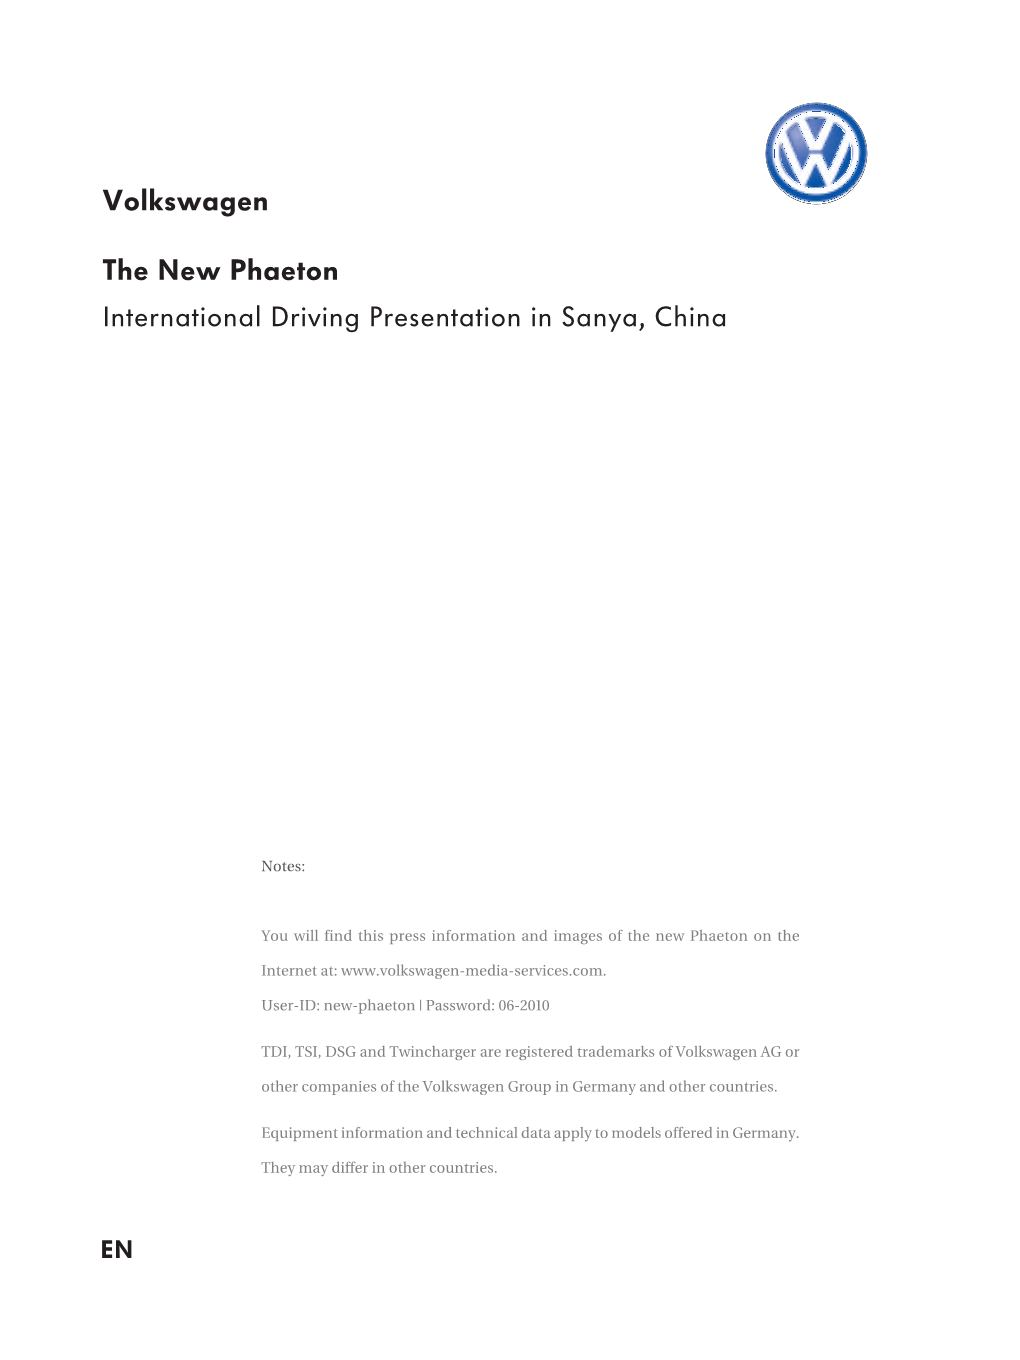 Volkswagen the New Phaeton International Driving Presentation In